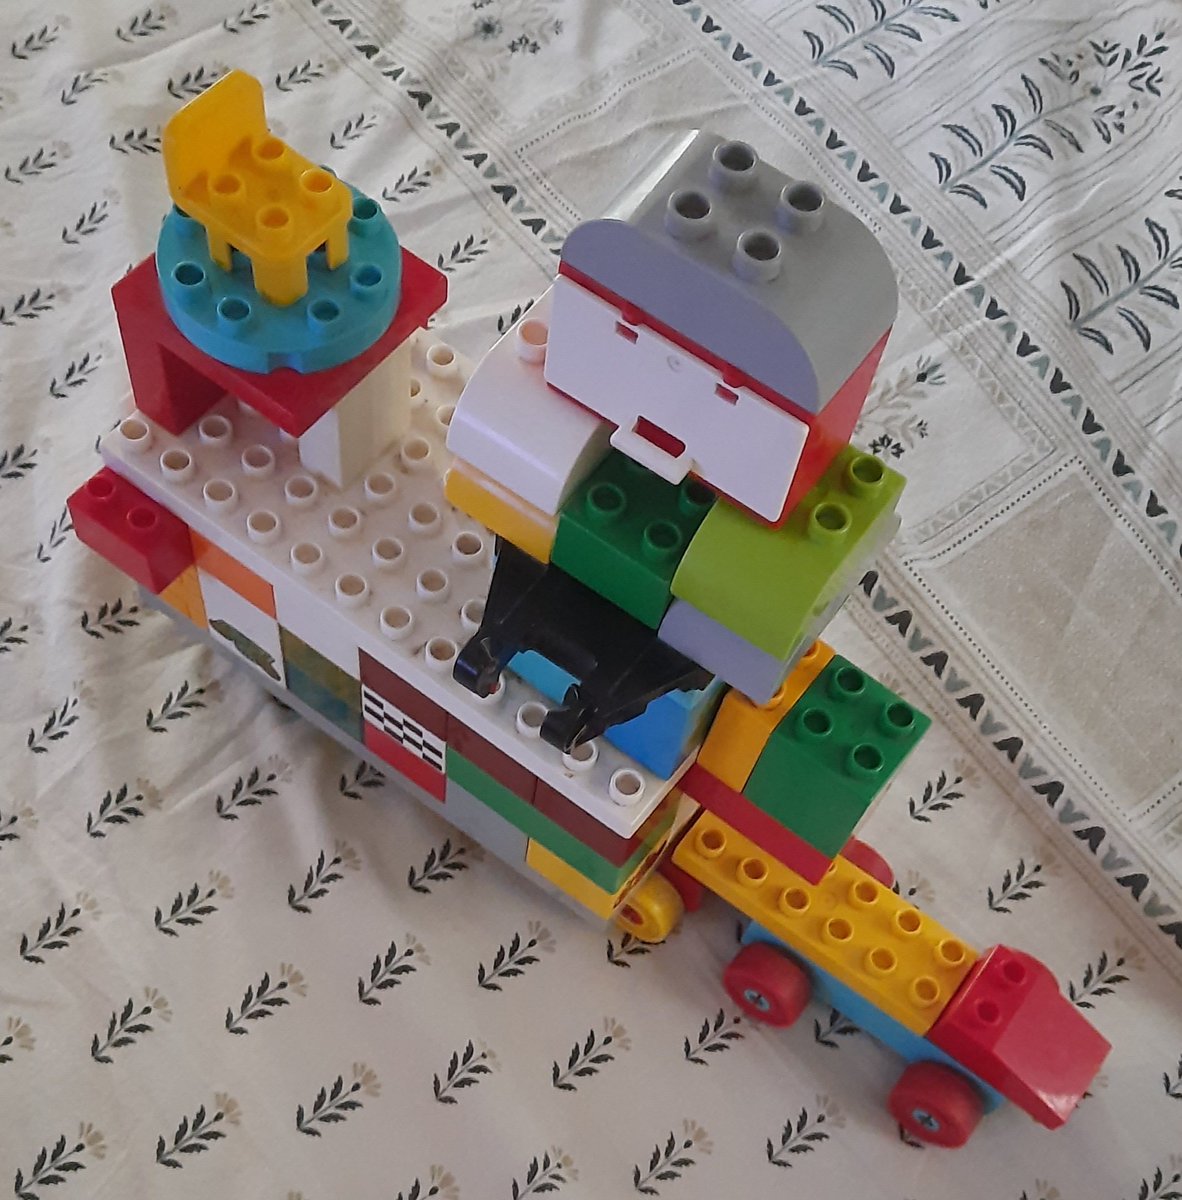 #LEGO creation by grandson